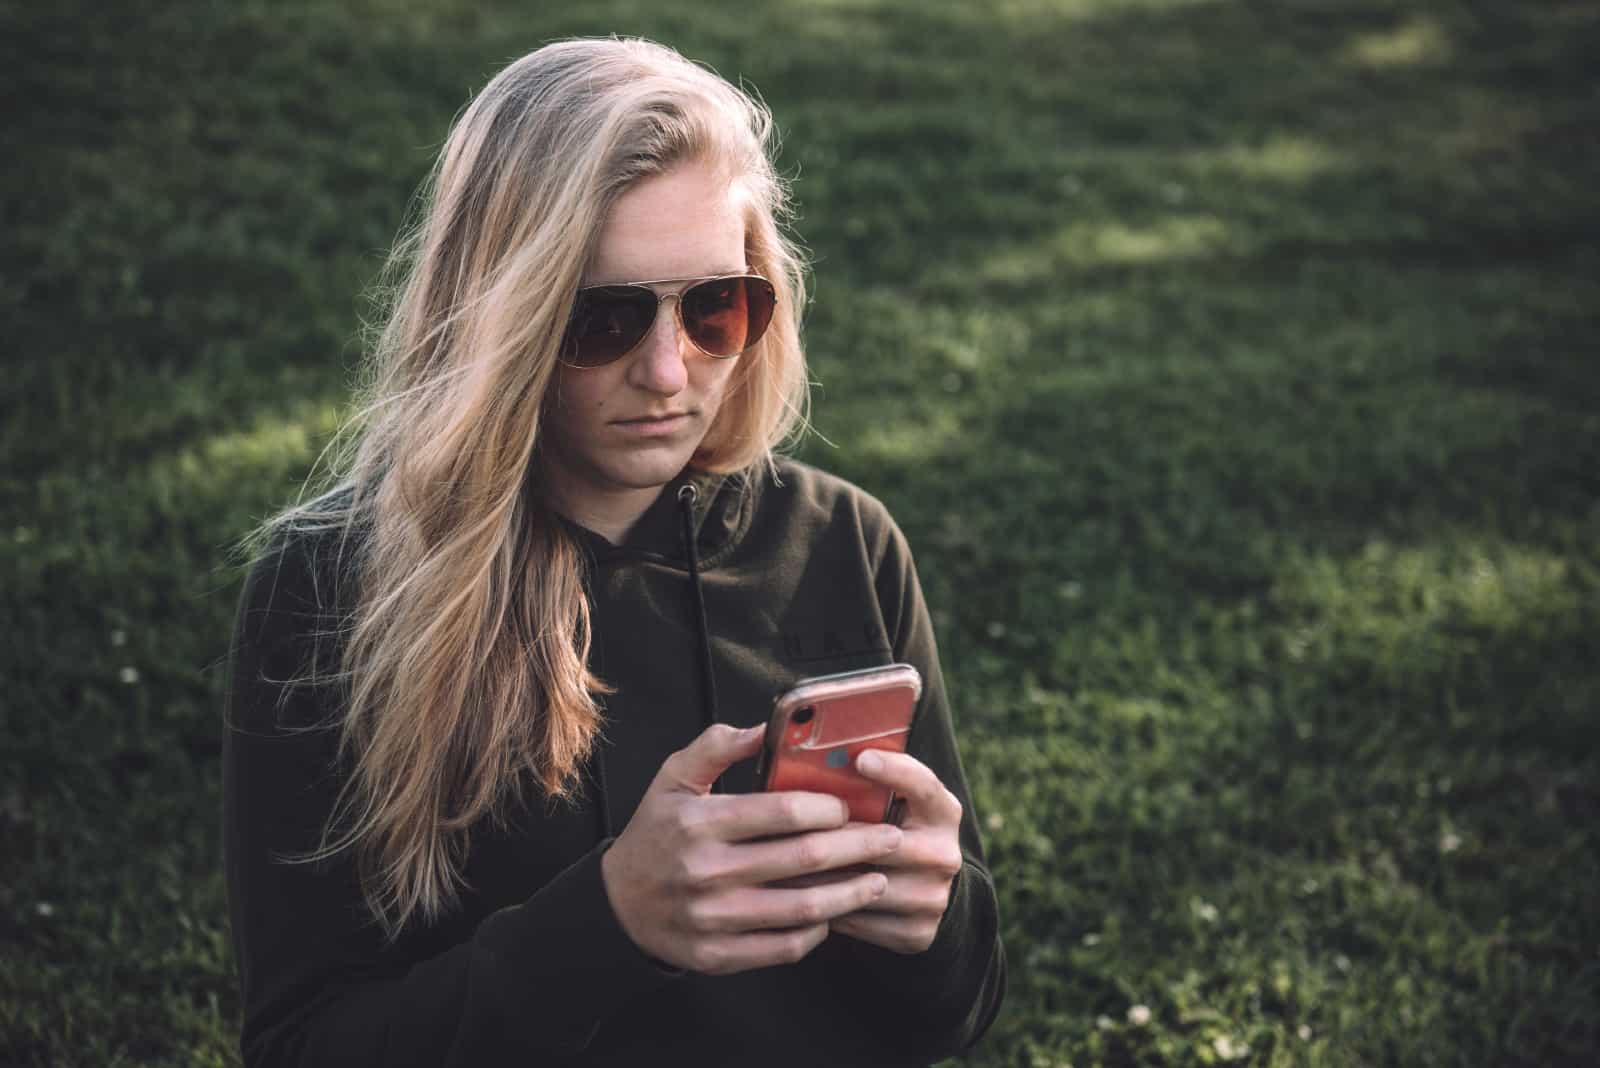 femme regardant smartphone assis sur l'herbe